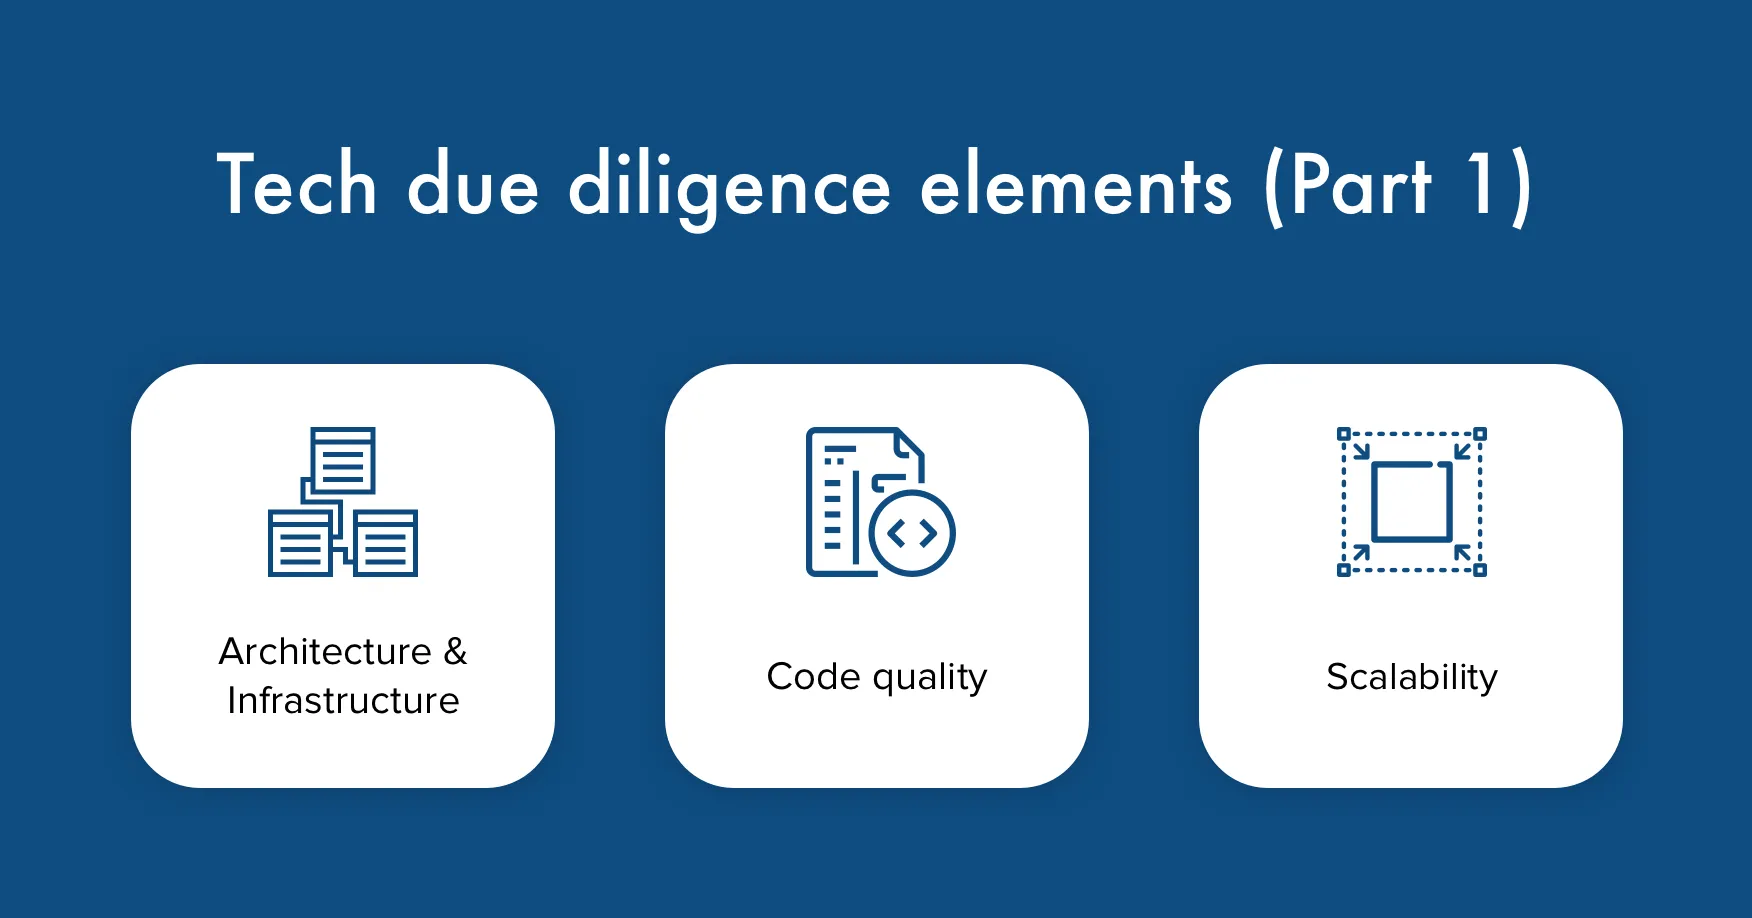 Technical due diligence elements (Part 2)